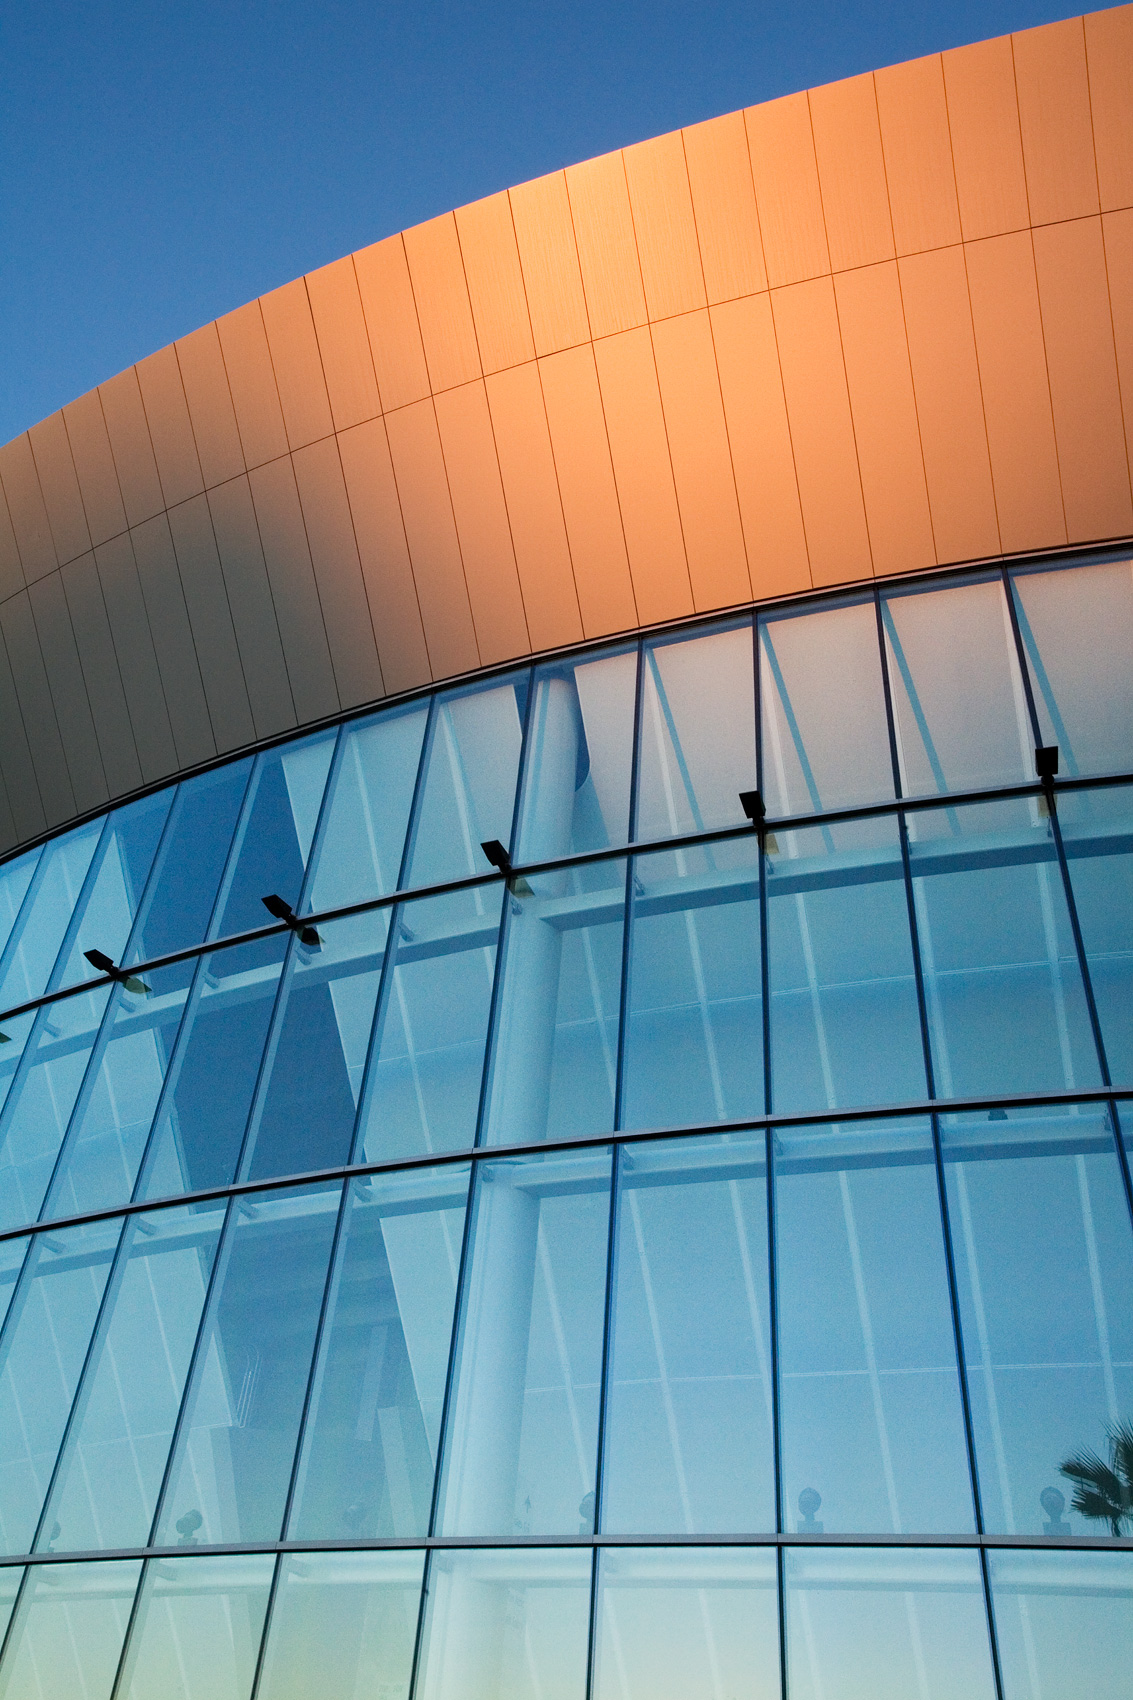 Detail reflection of the setting sun on Stockton Arena